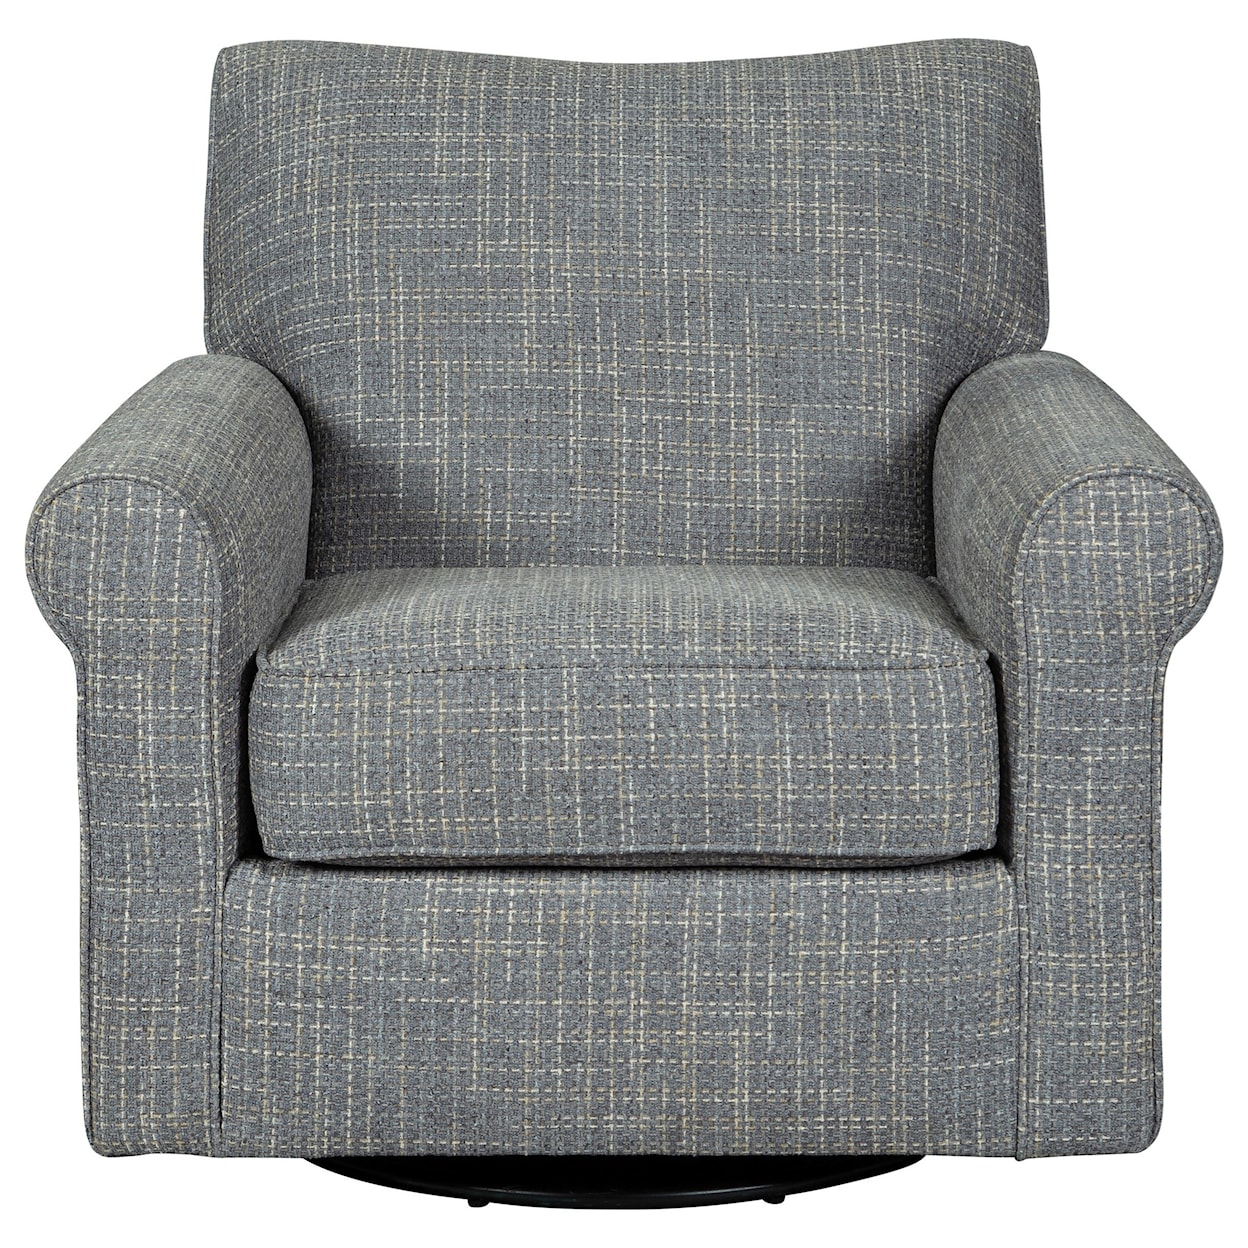 Ashley Furniture Signature Design Renley Swivel Glider Accent Chair